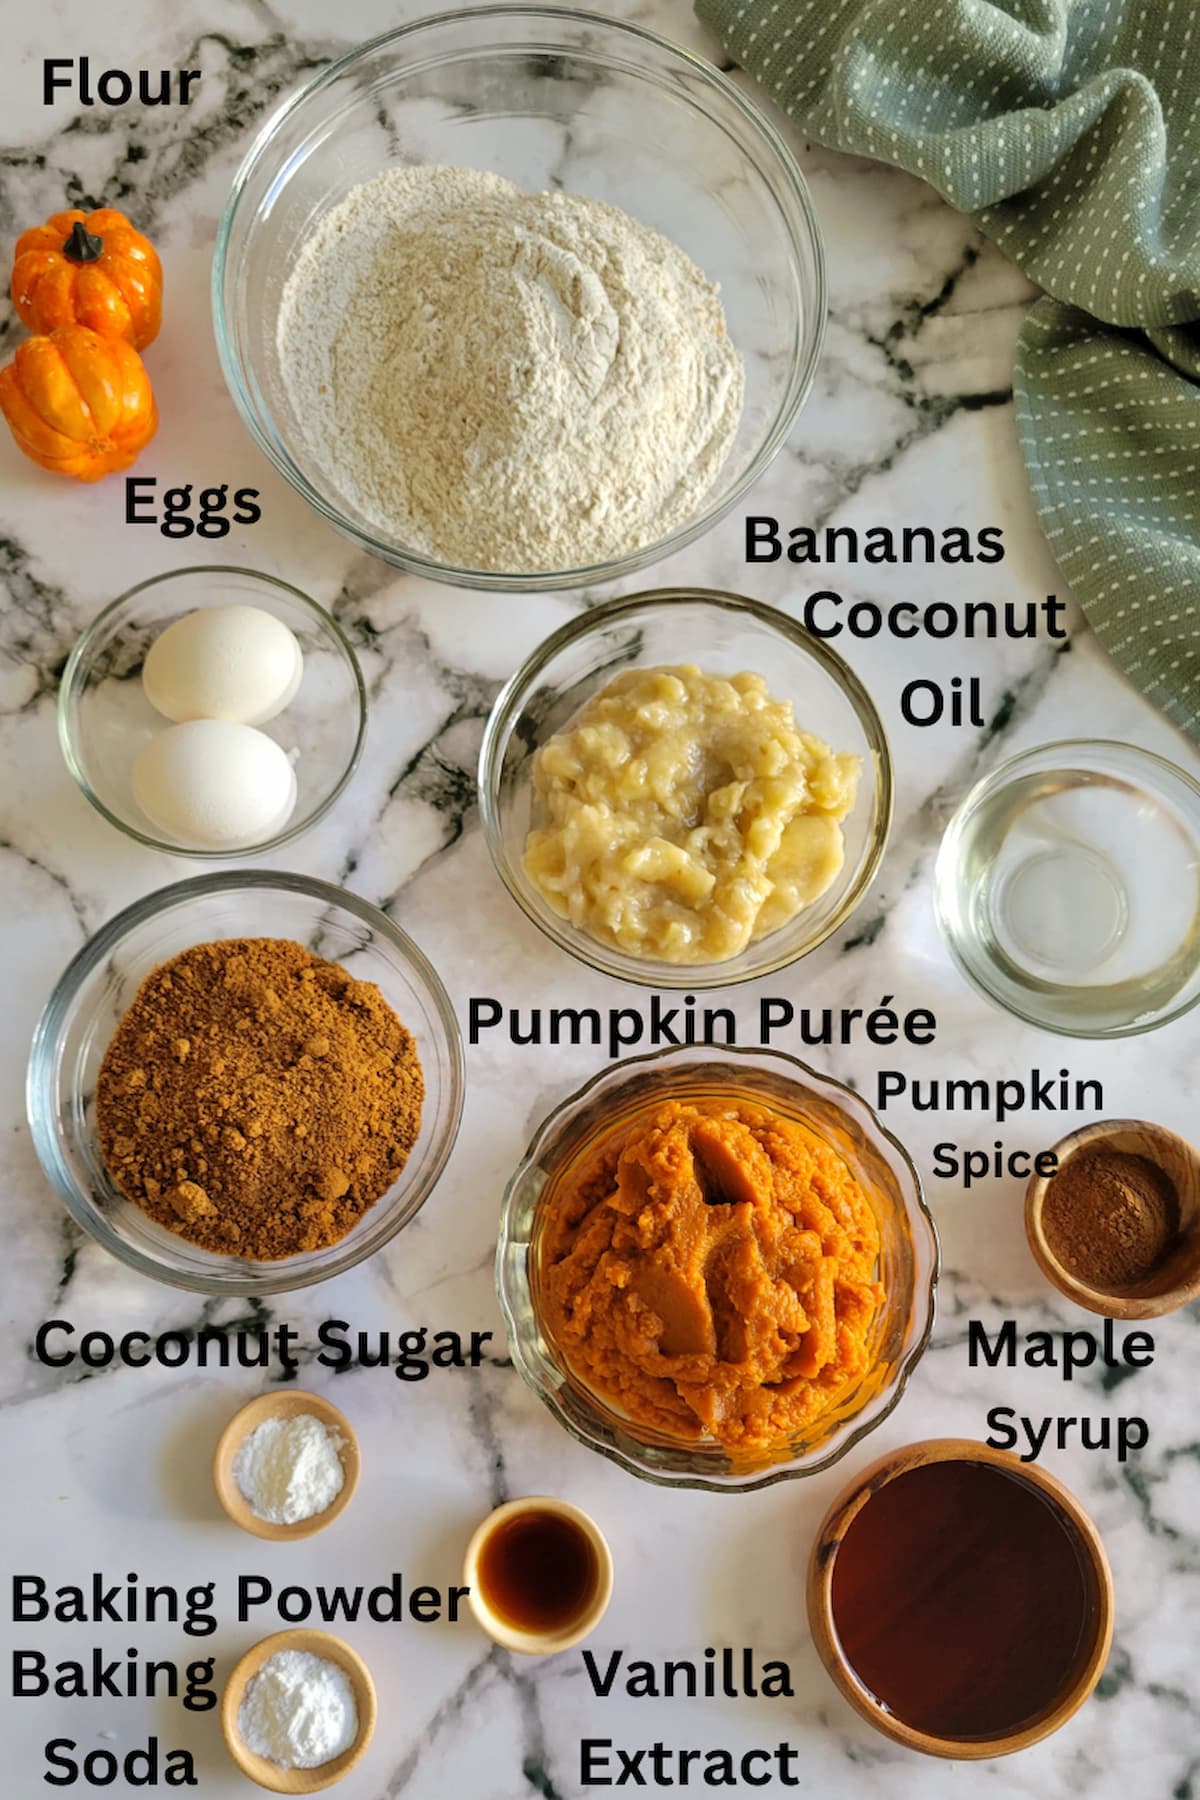 ingredients for banana bread with pumpkin - pumpkin spice, pumpkin puree, flour, bananas, coconut oil, coconut sugar, baking soda, baking powder, vanilla extract, eggs, maple syrup